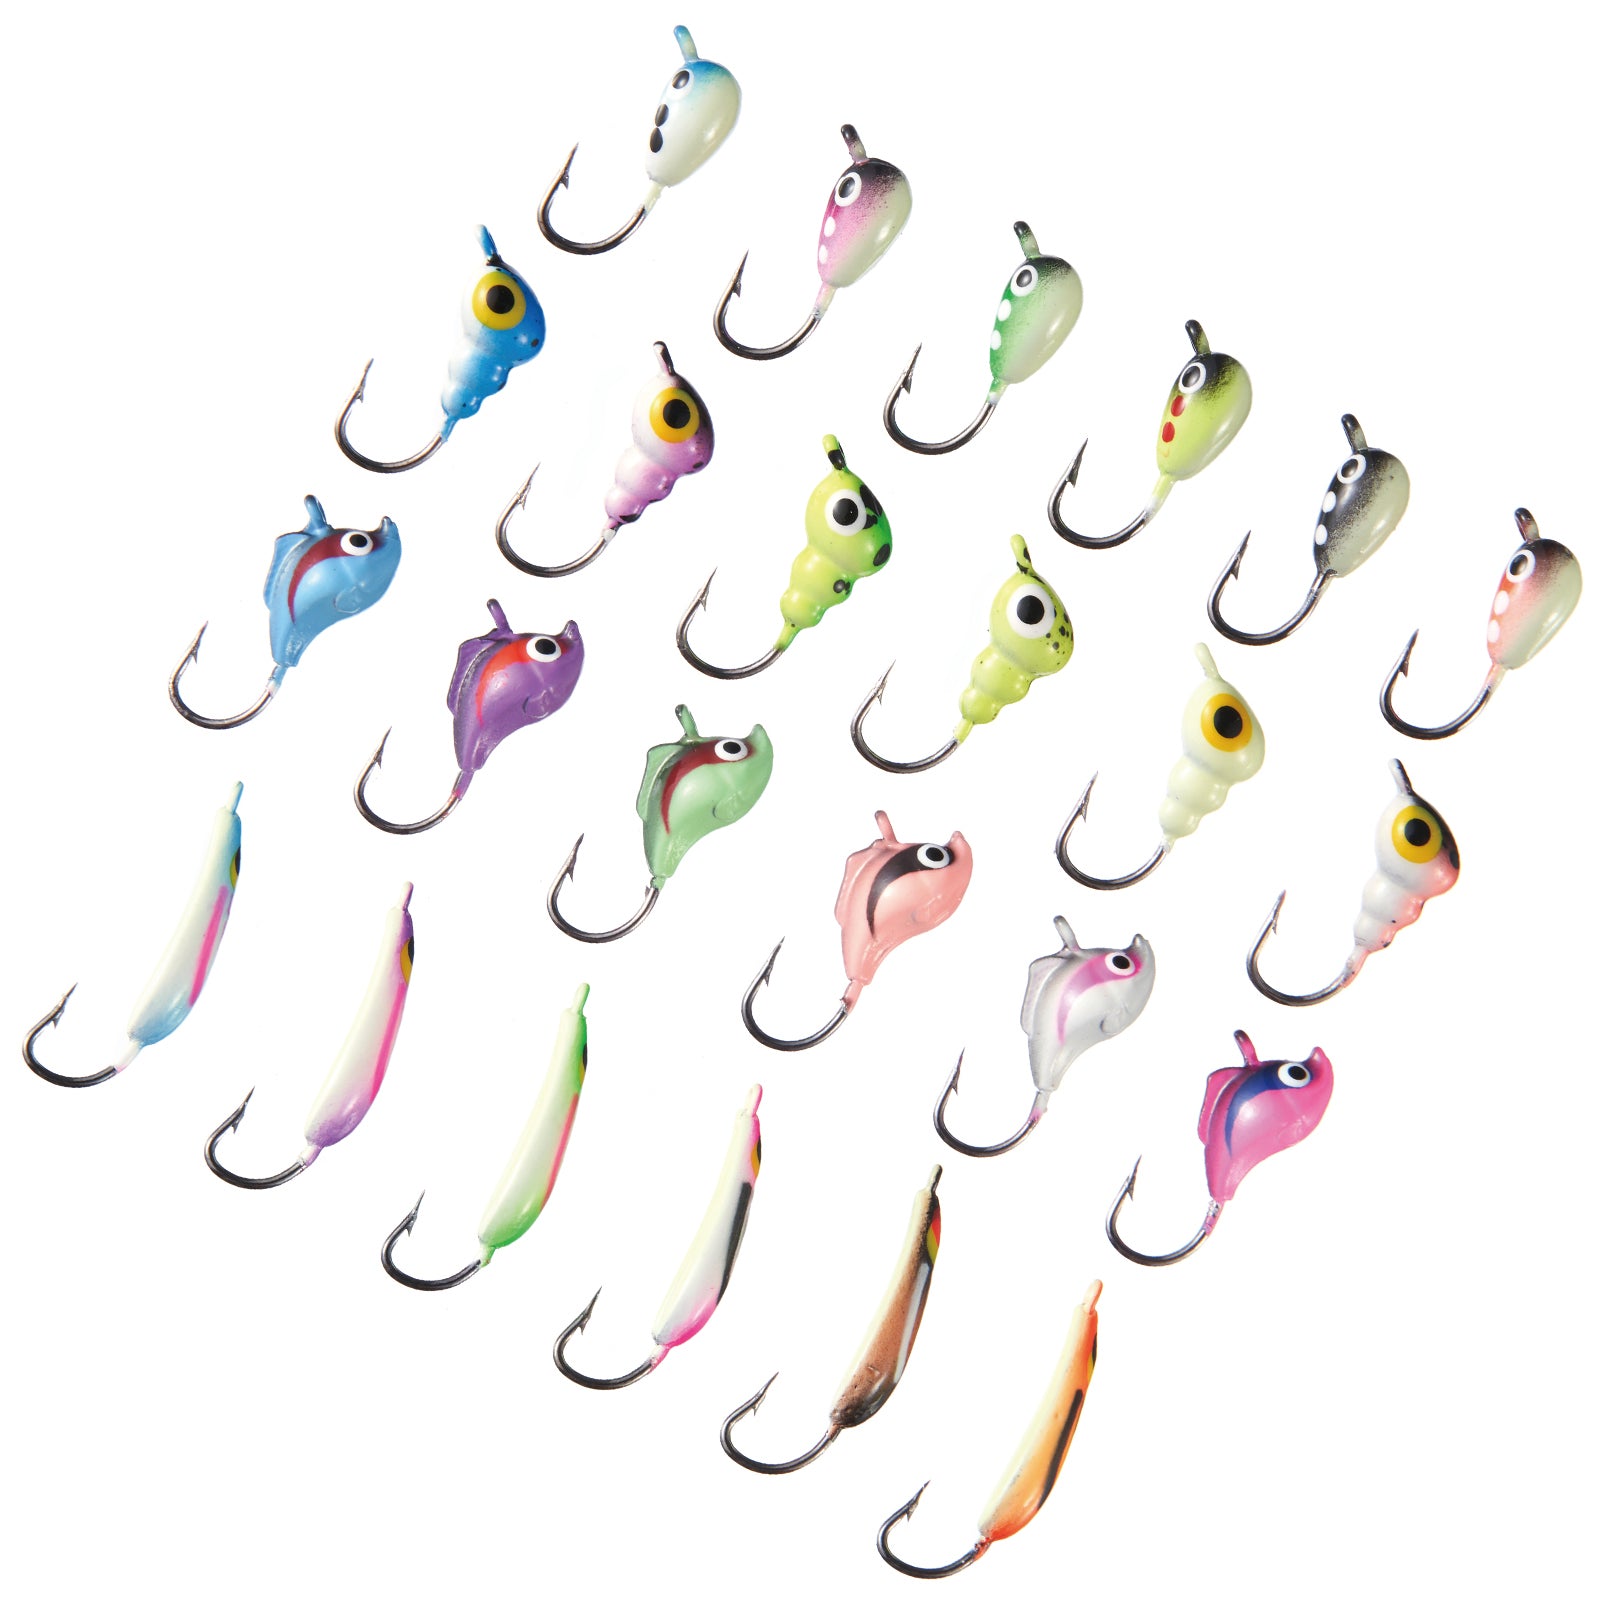 Ice Fishing Lure Kit Glowing Paint Jigs, 24pcs assorted  crappie/panfish/perch jigs - BI04